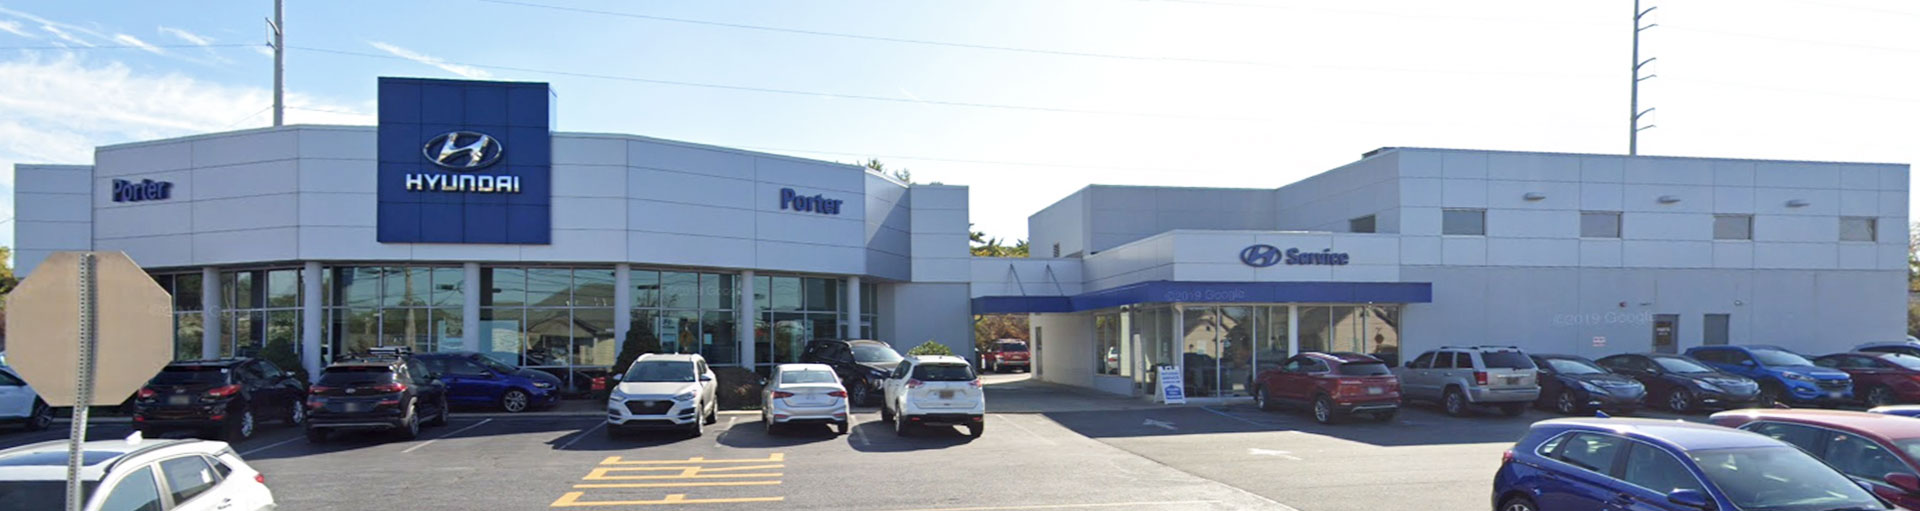 Porter Hyundai Four-Wheel Alignment Service